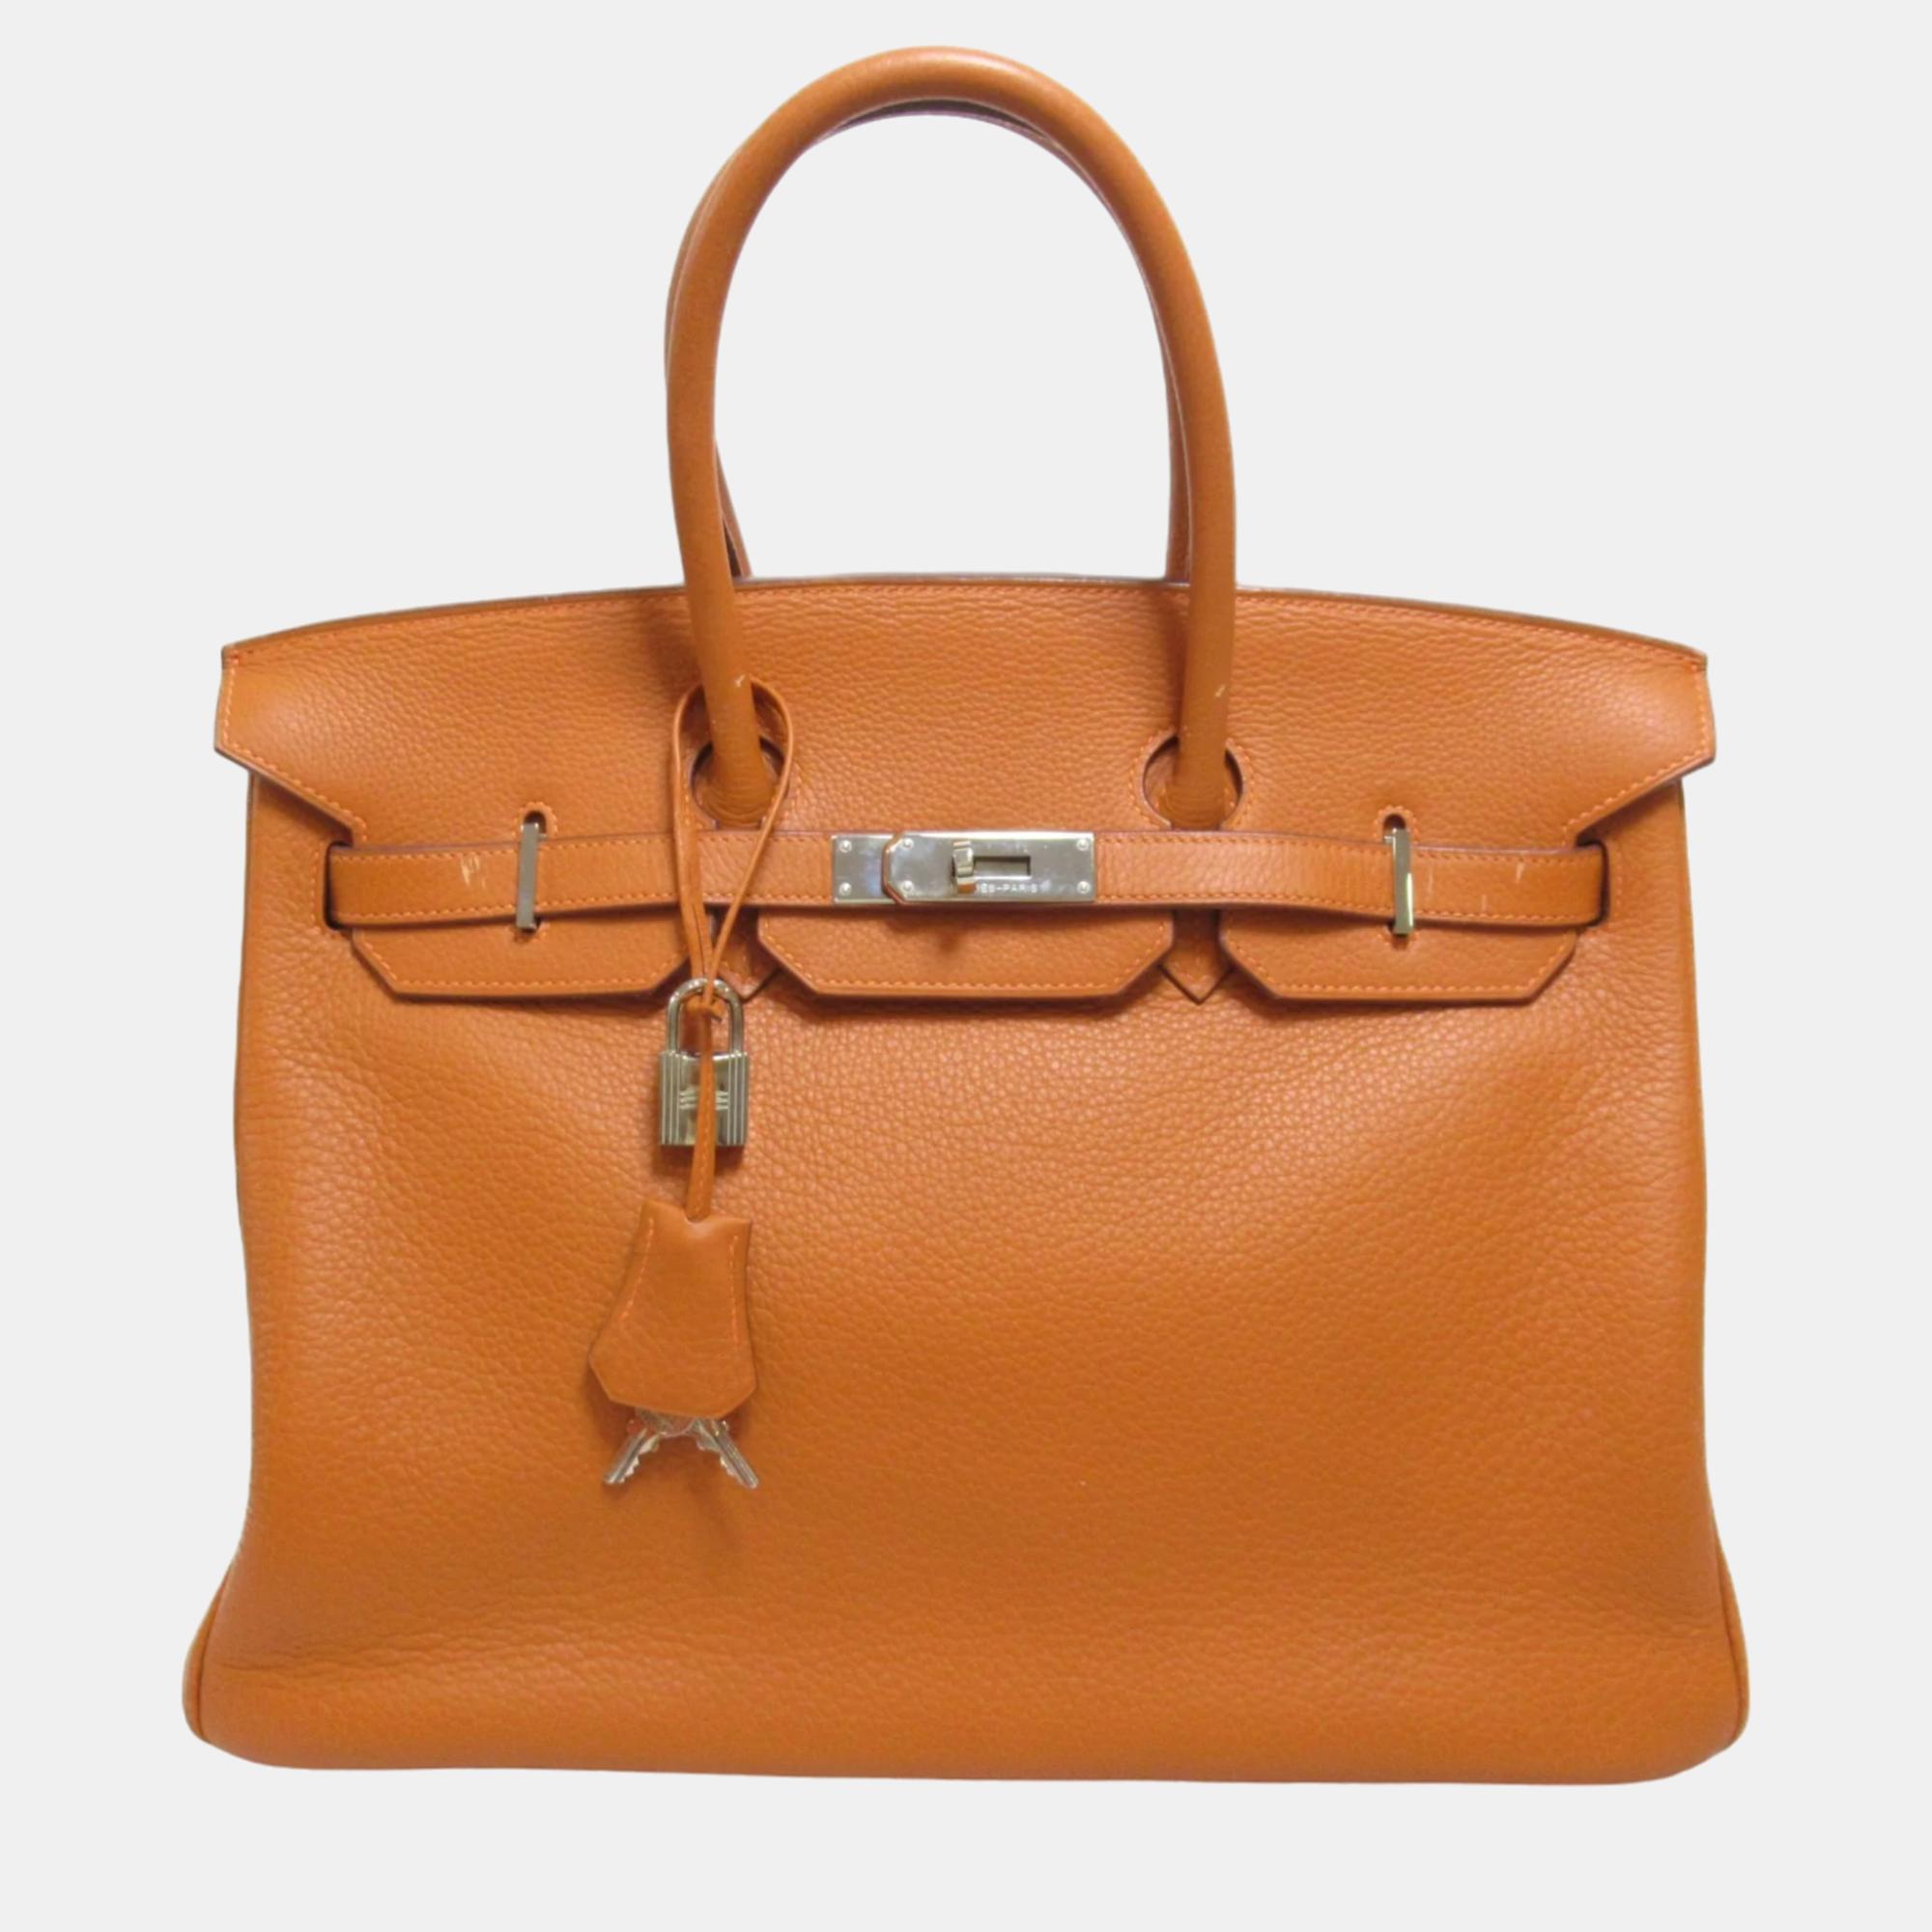 Pre-owned Hermes Orange Taurillon Clemence Leather Birkin Handbag